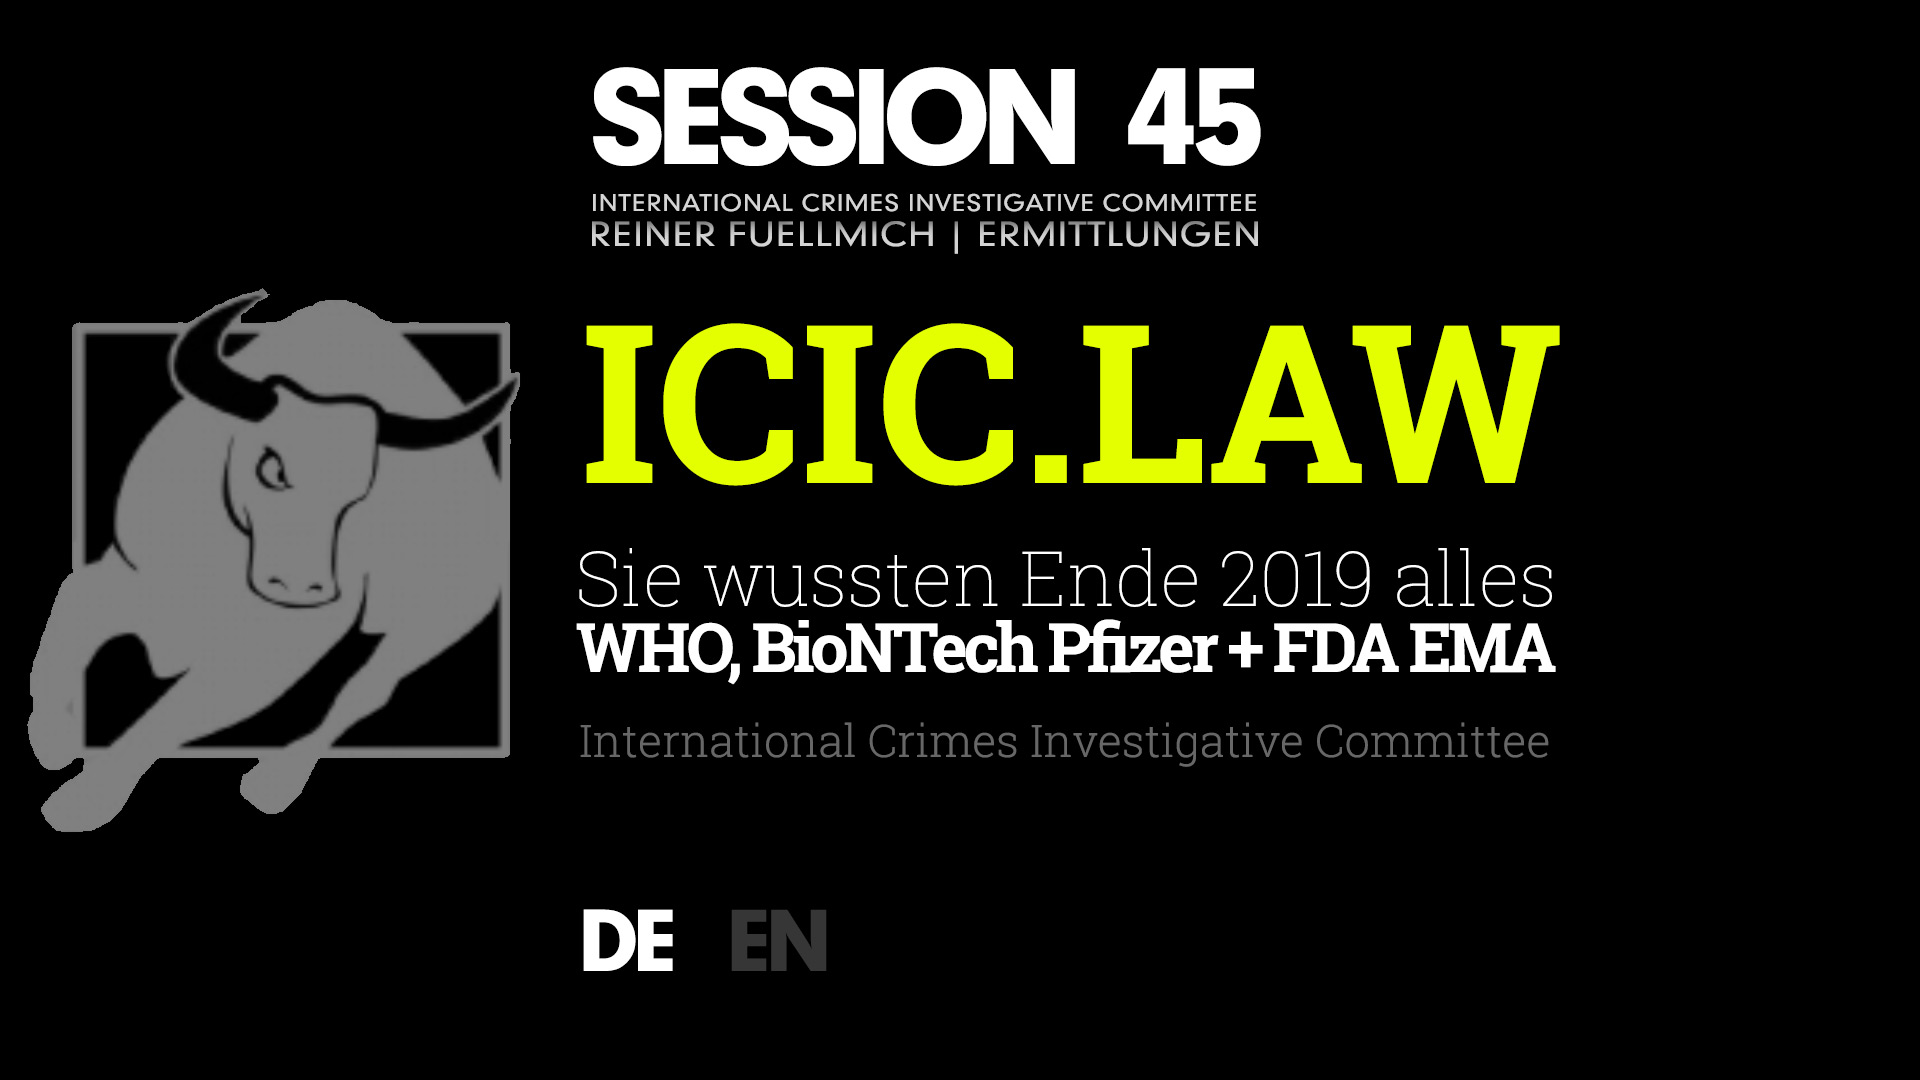 ICIC | SESSION 45 - WHO - BioNTech-Pfizer und FDA-EMA wussten Ende 2019 alles